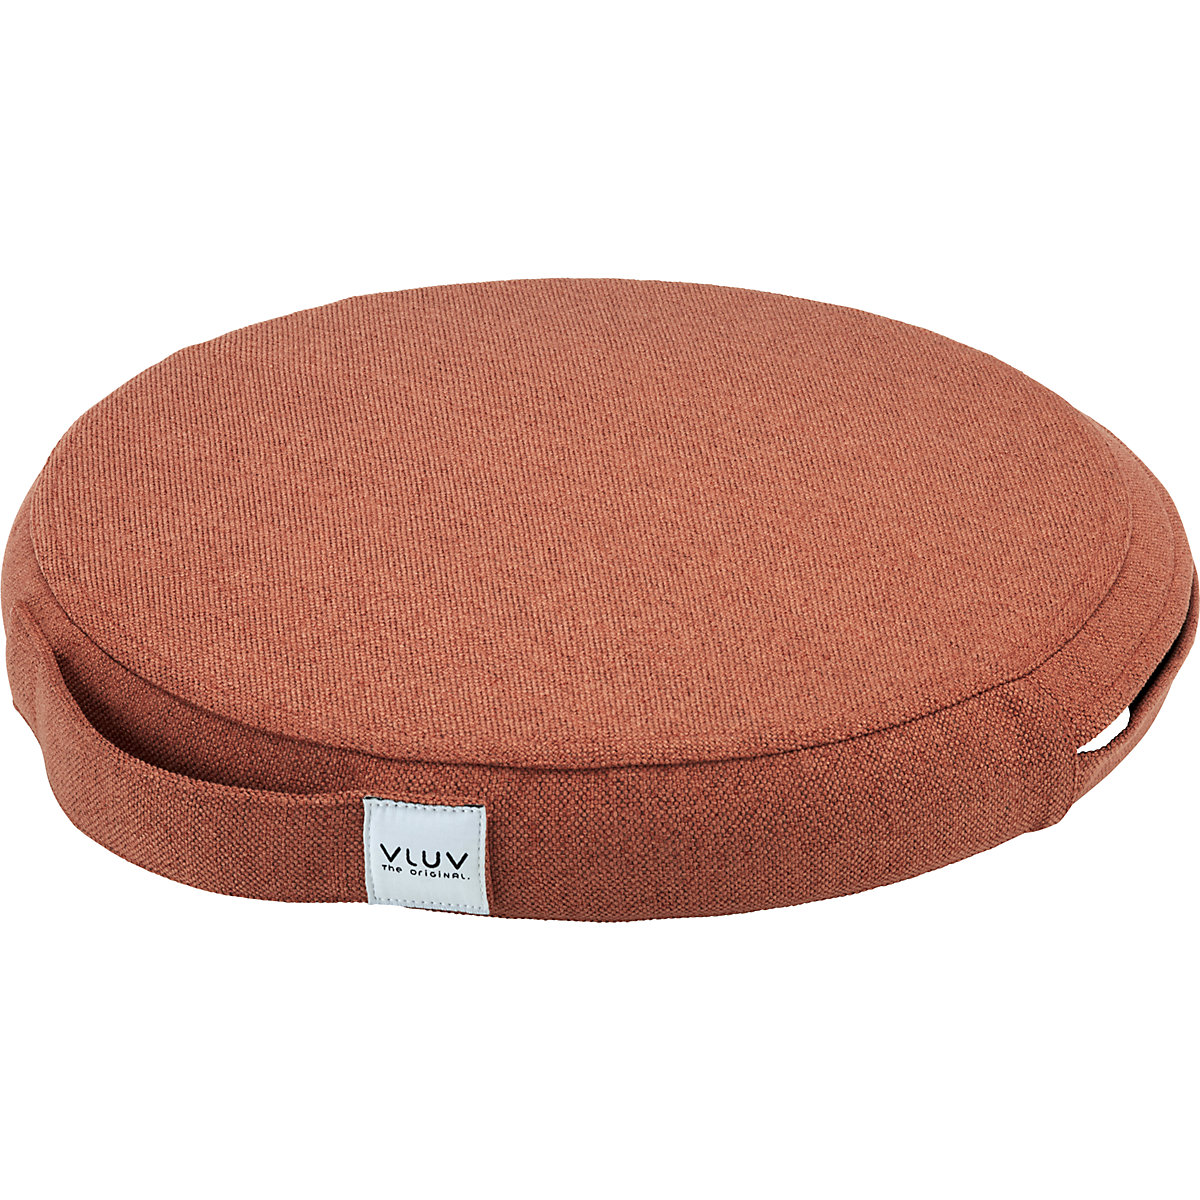 PIL&PED SOVA balance cushion – VLUV, with fabric cover, Ø 400 mm, salmon orange-11